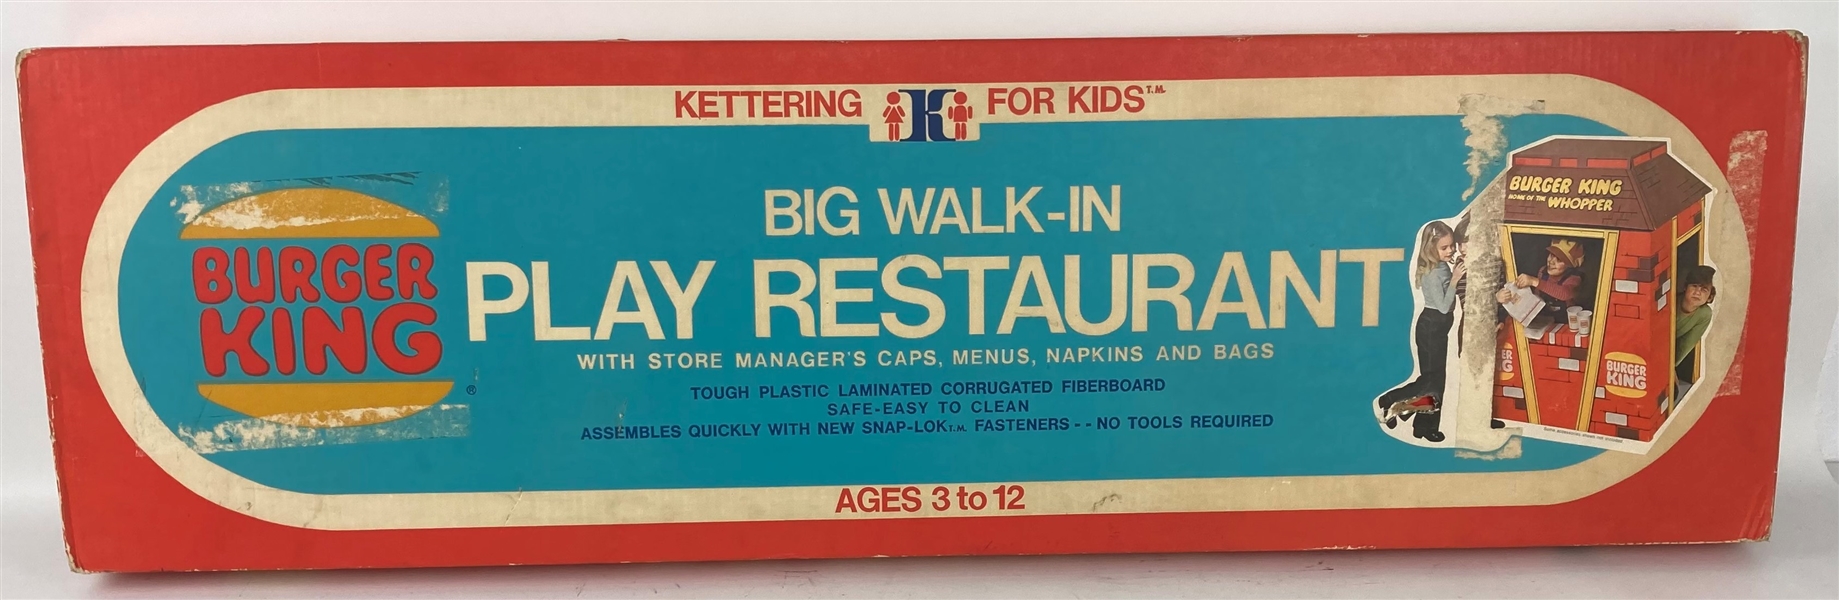 1975 Burger King MIB Kettering For Kids Big Walk In Play Restaurant